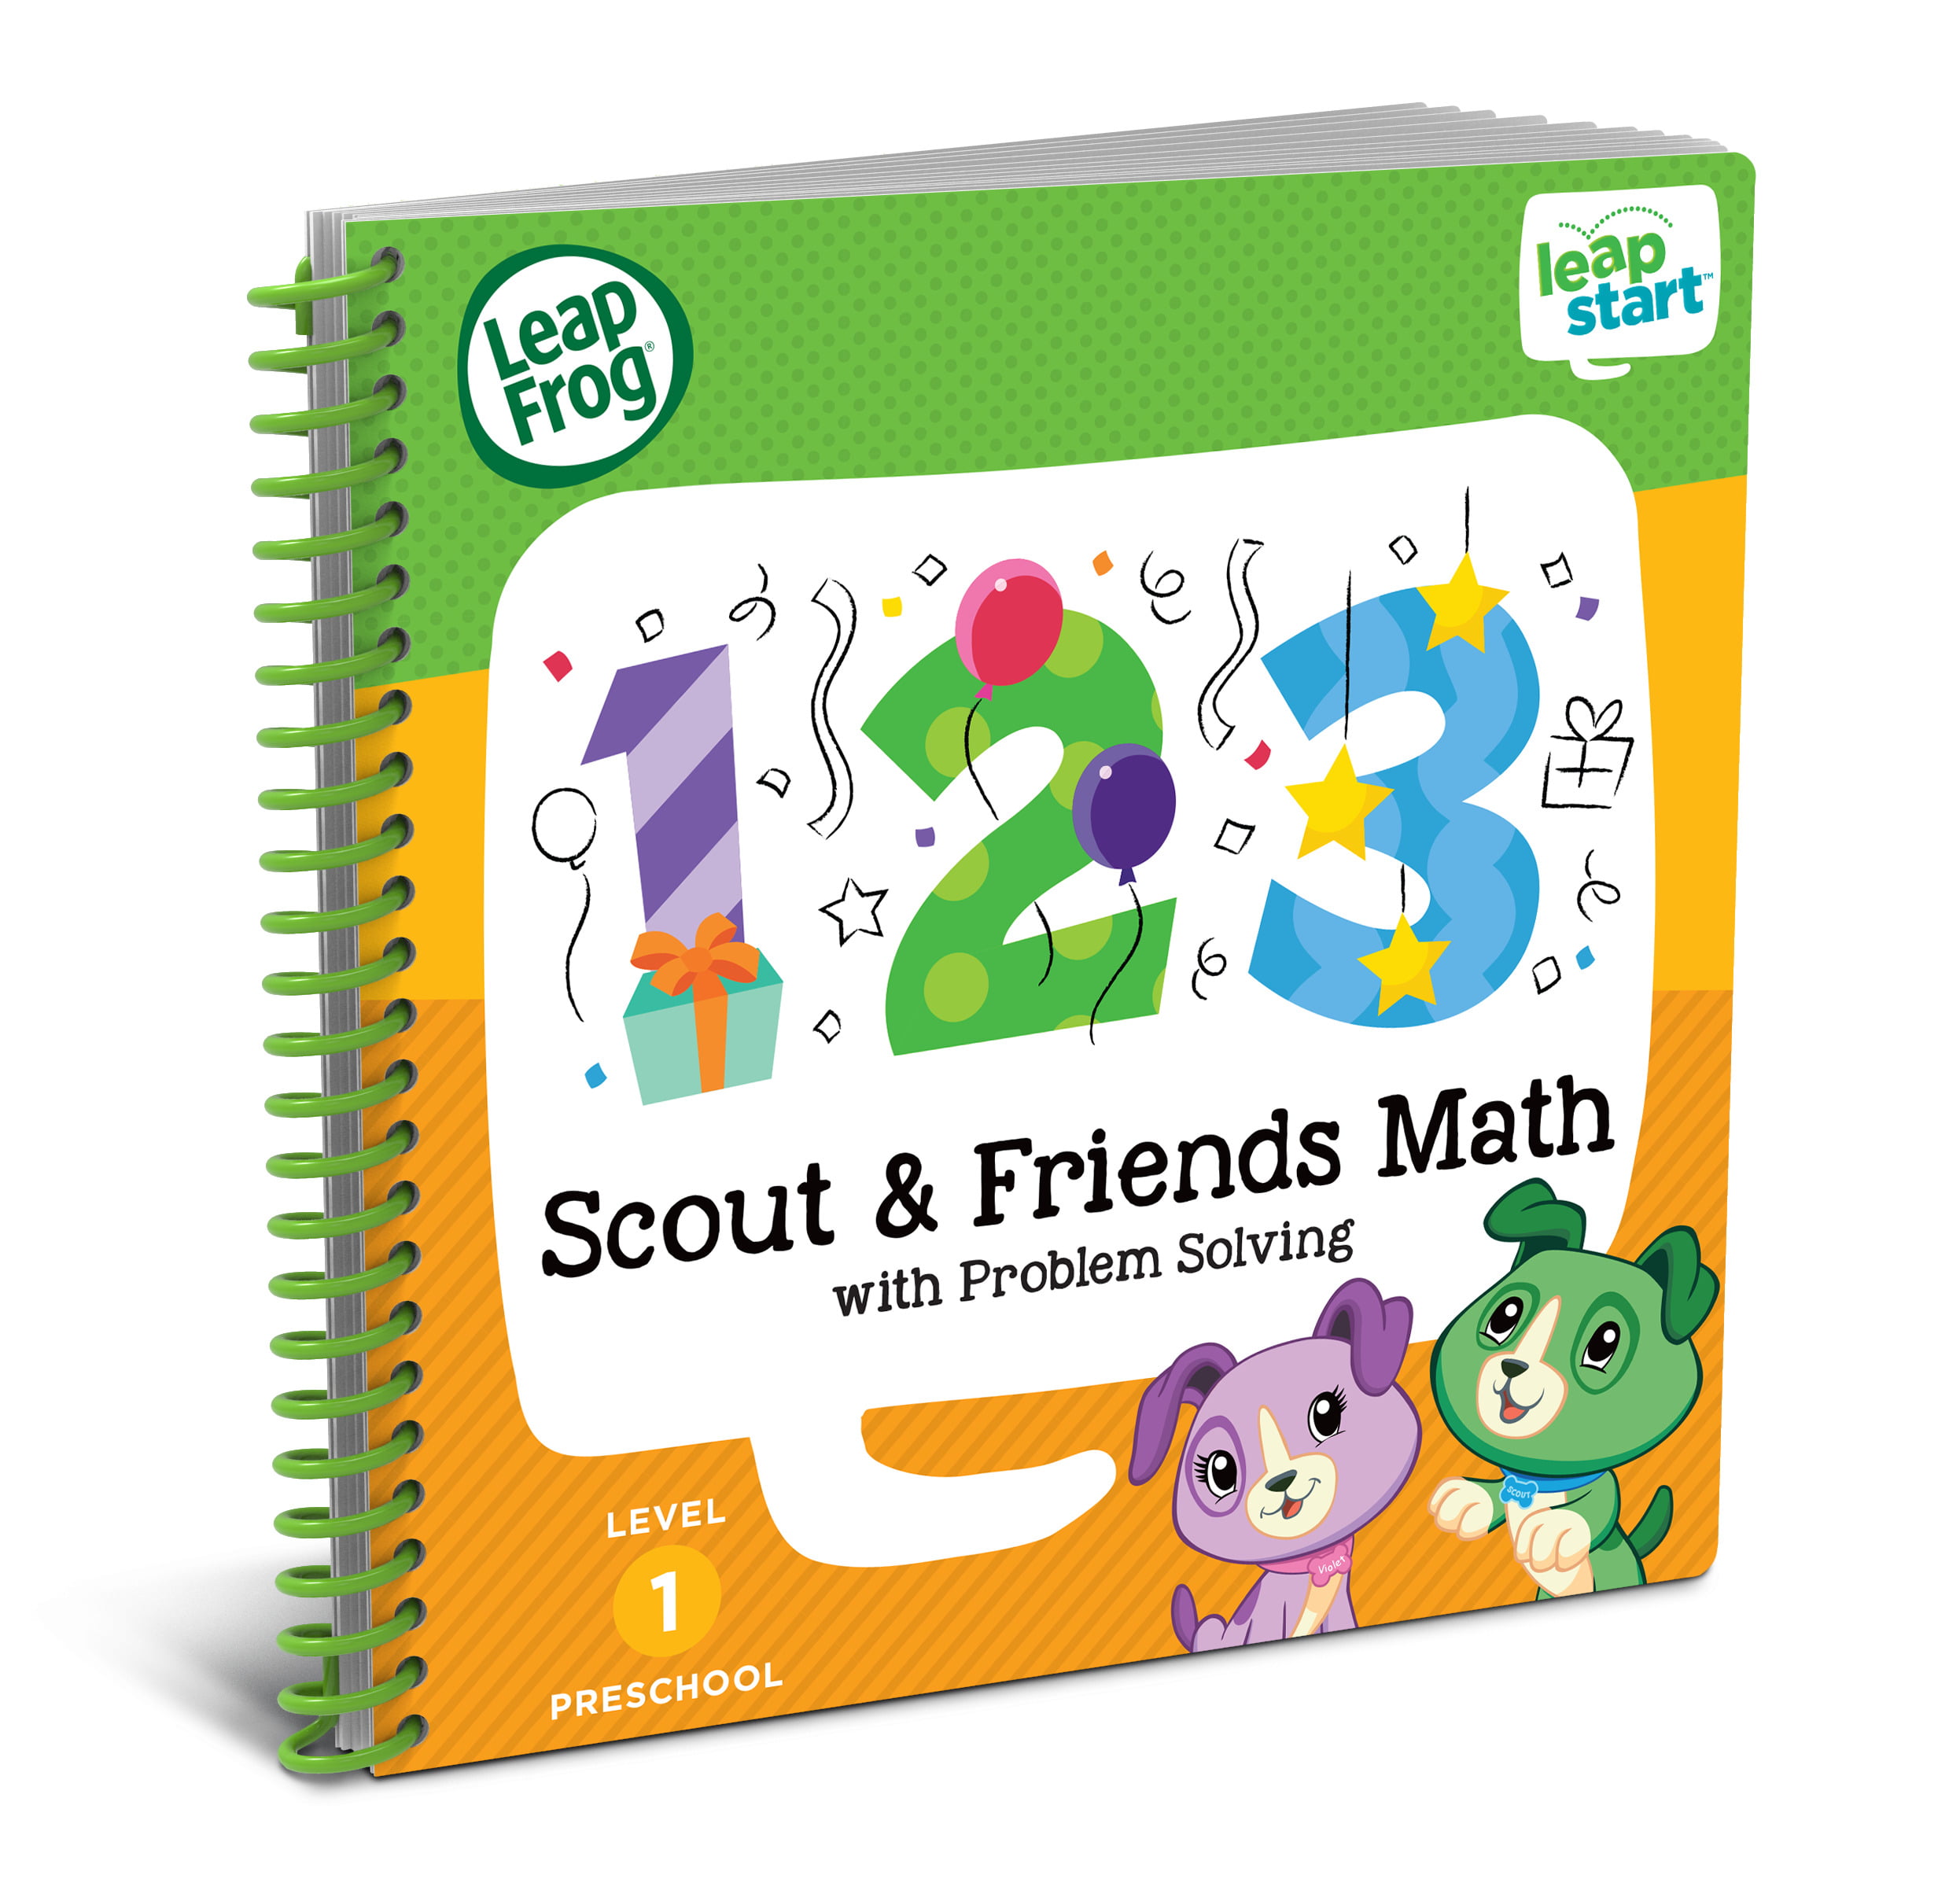 LeapFrog LeapStart Scout & Friends Math Problem Solving Level 1 Preschool 40 Act for sale online